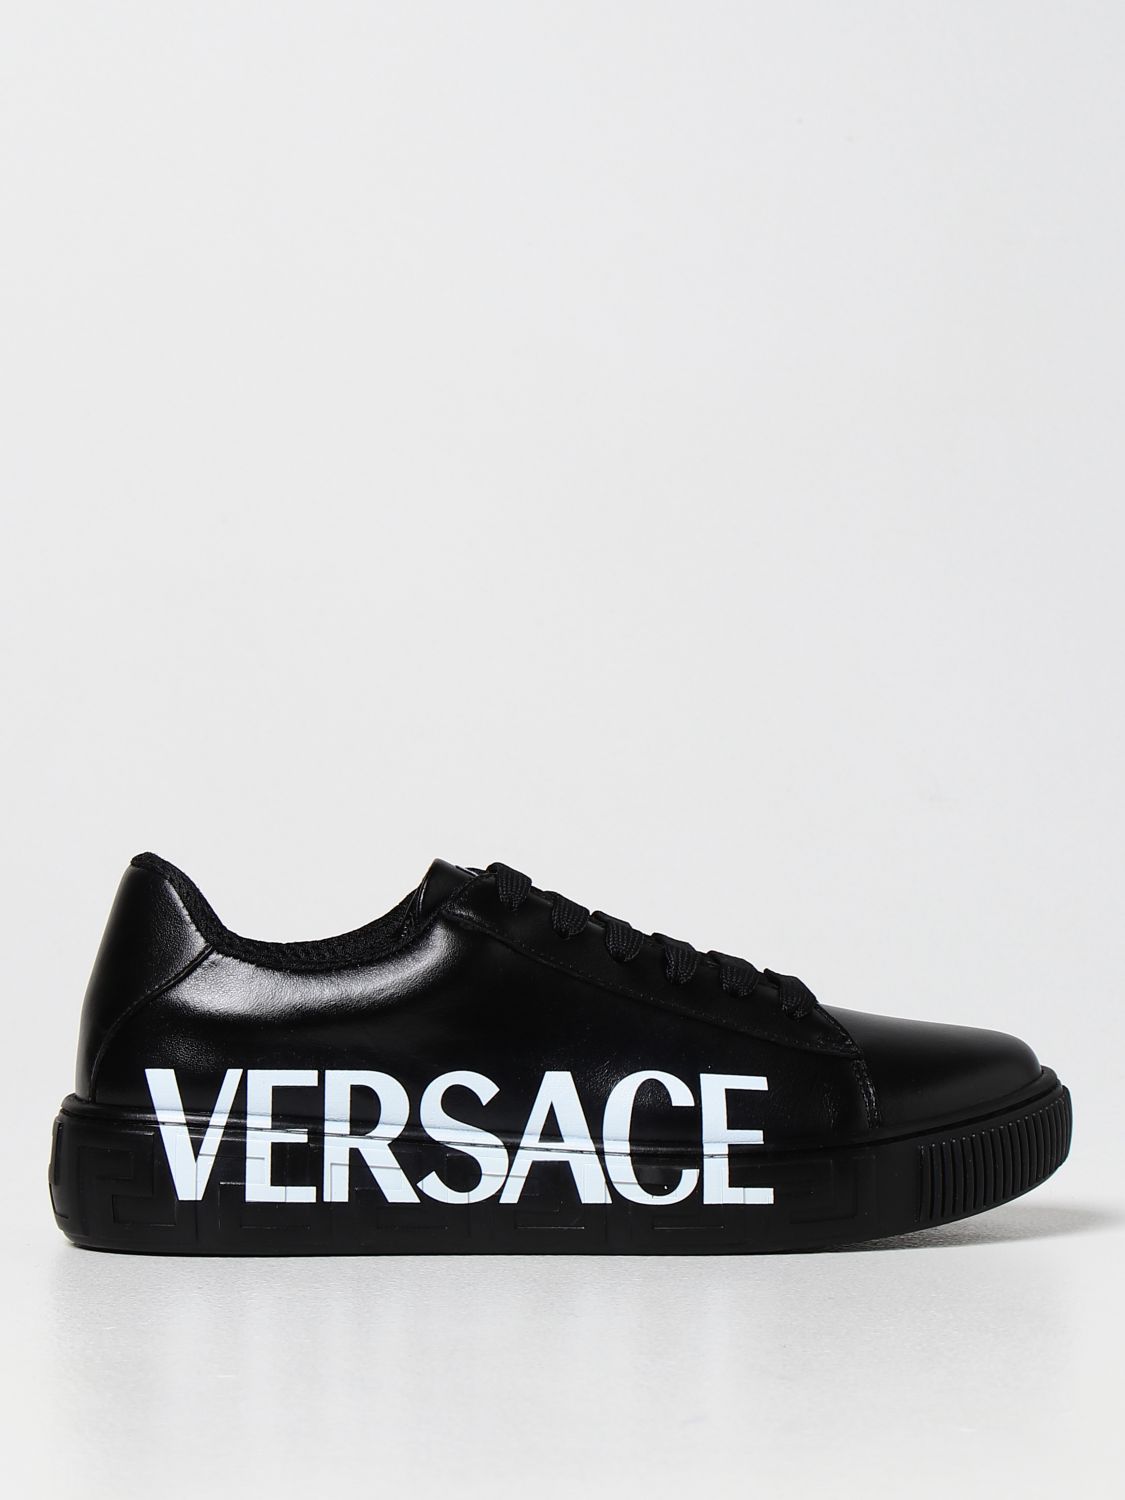 Schuhe Young Versace: Young Versace Jungen Schuhe schwarz 1